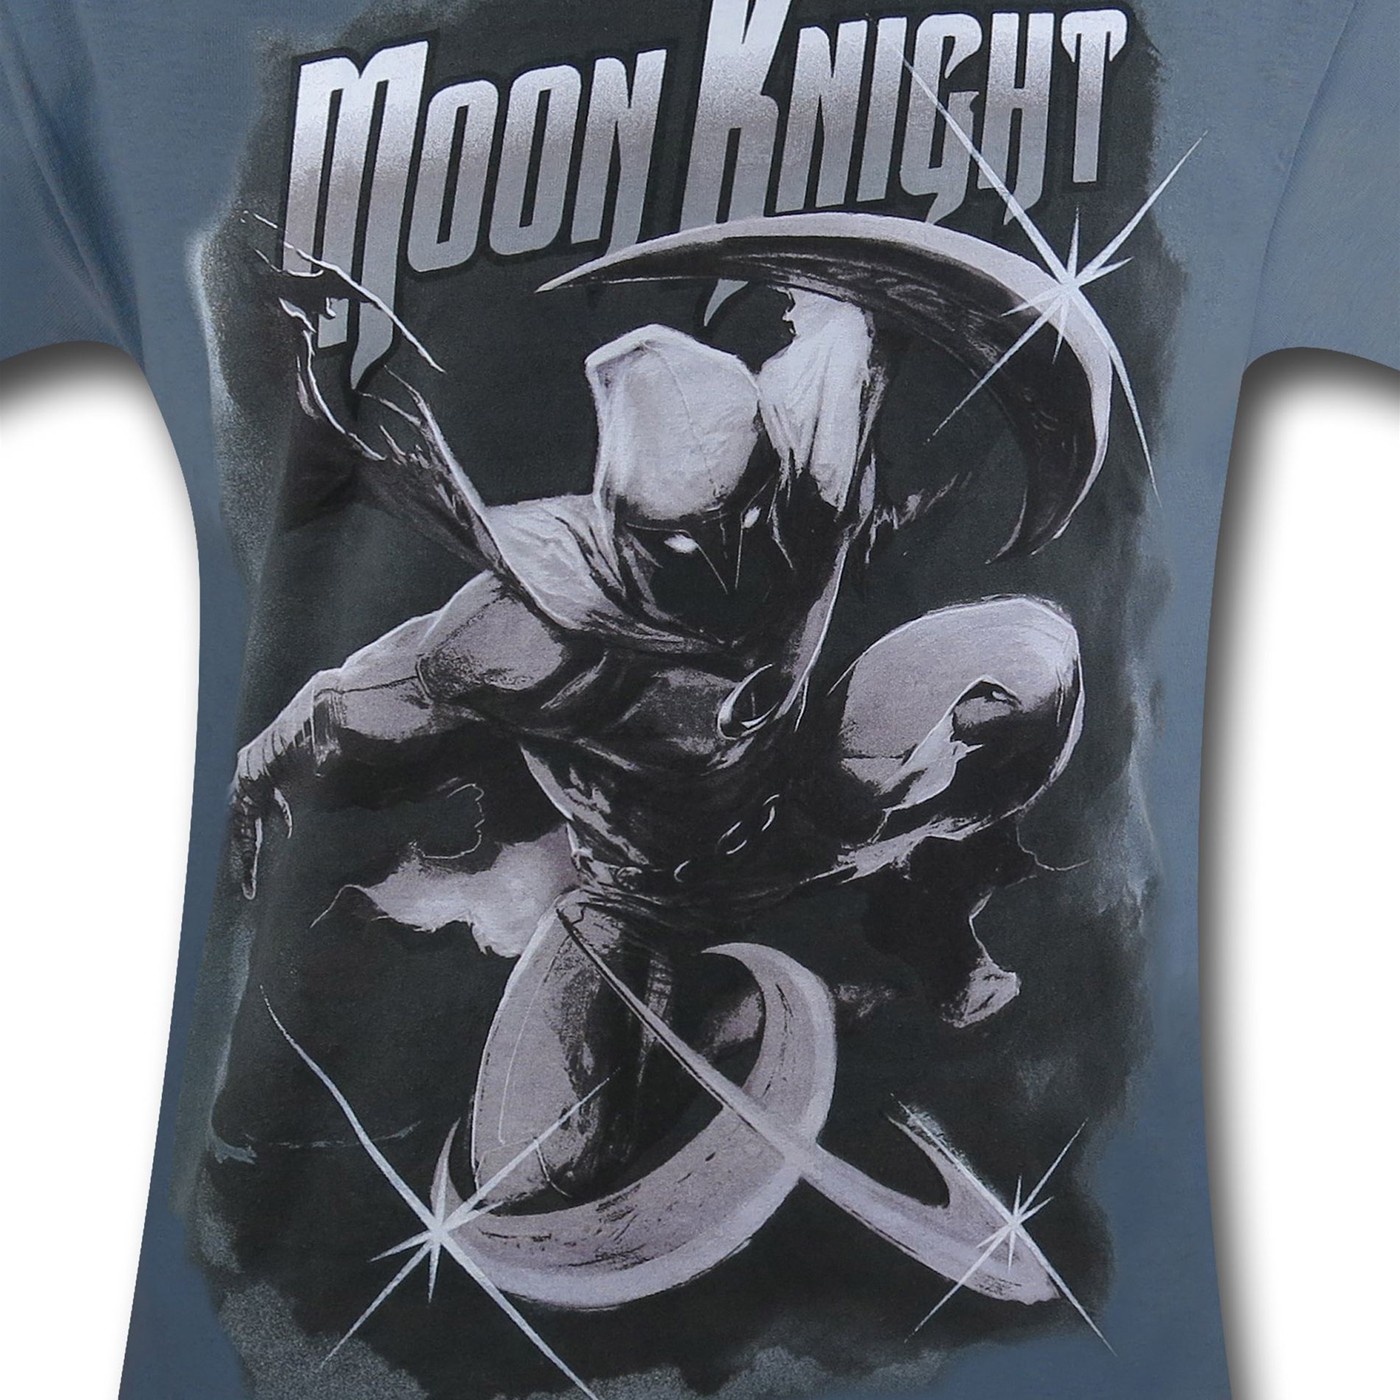 Moon Knight Crescent Darts on Grey T-Shirt